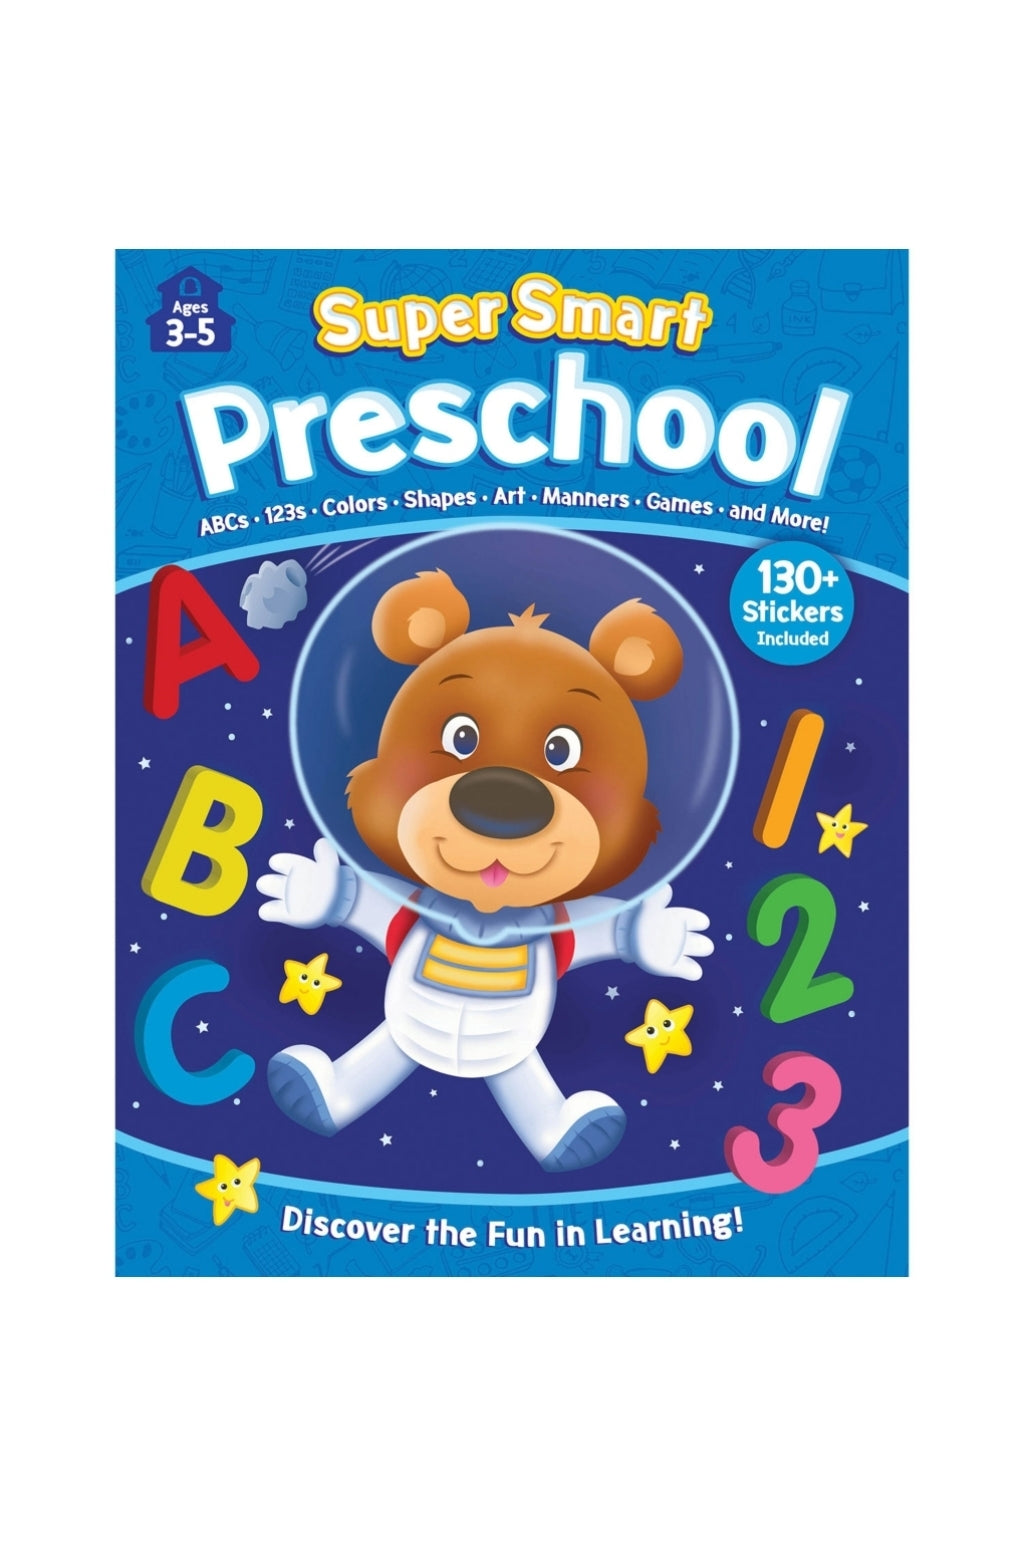 Super Smart Preschool 352 Page Workbook with Stickers